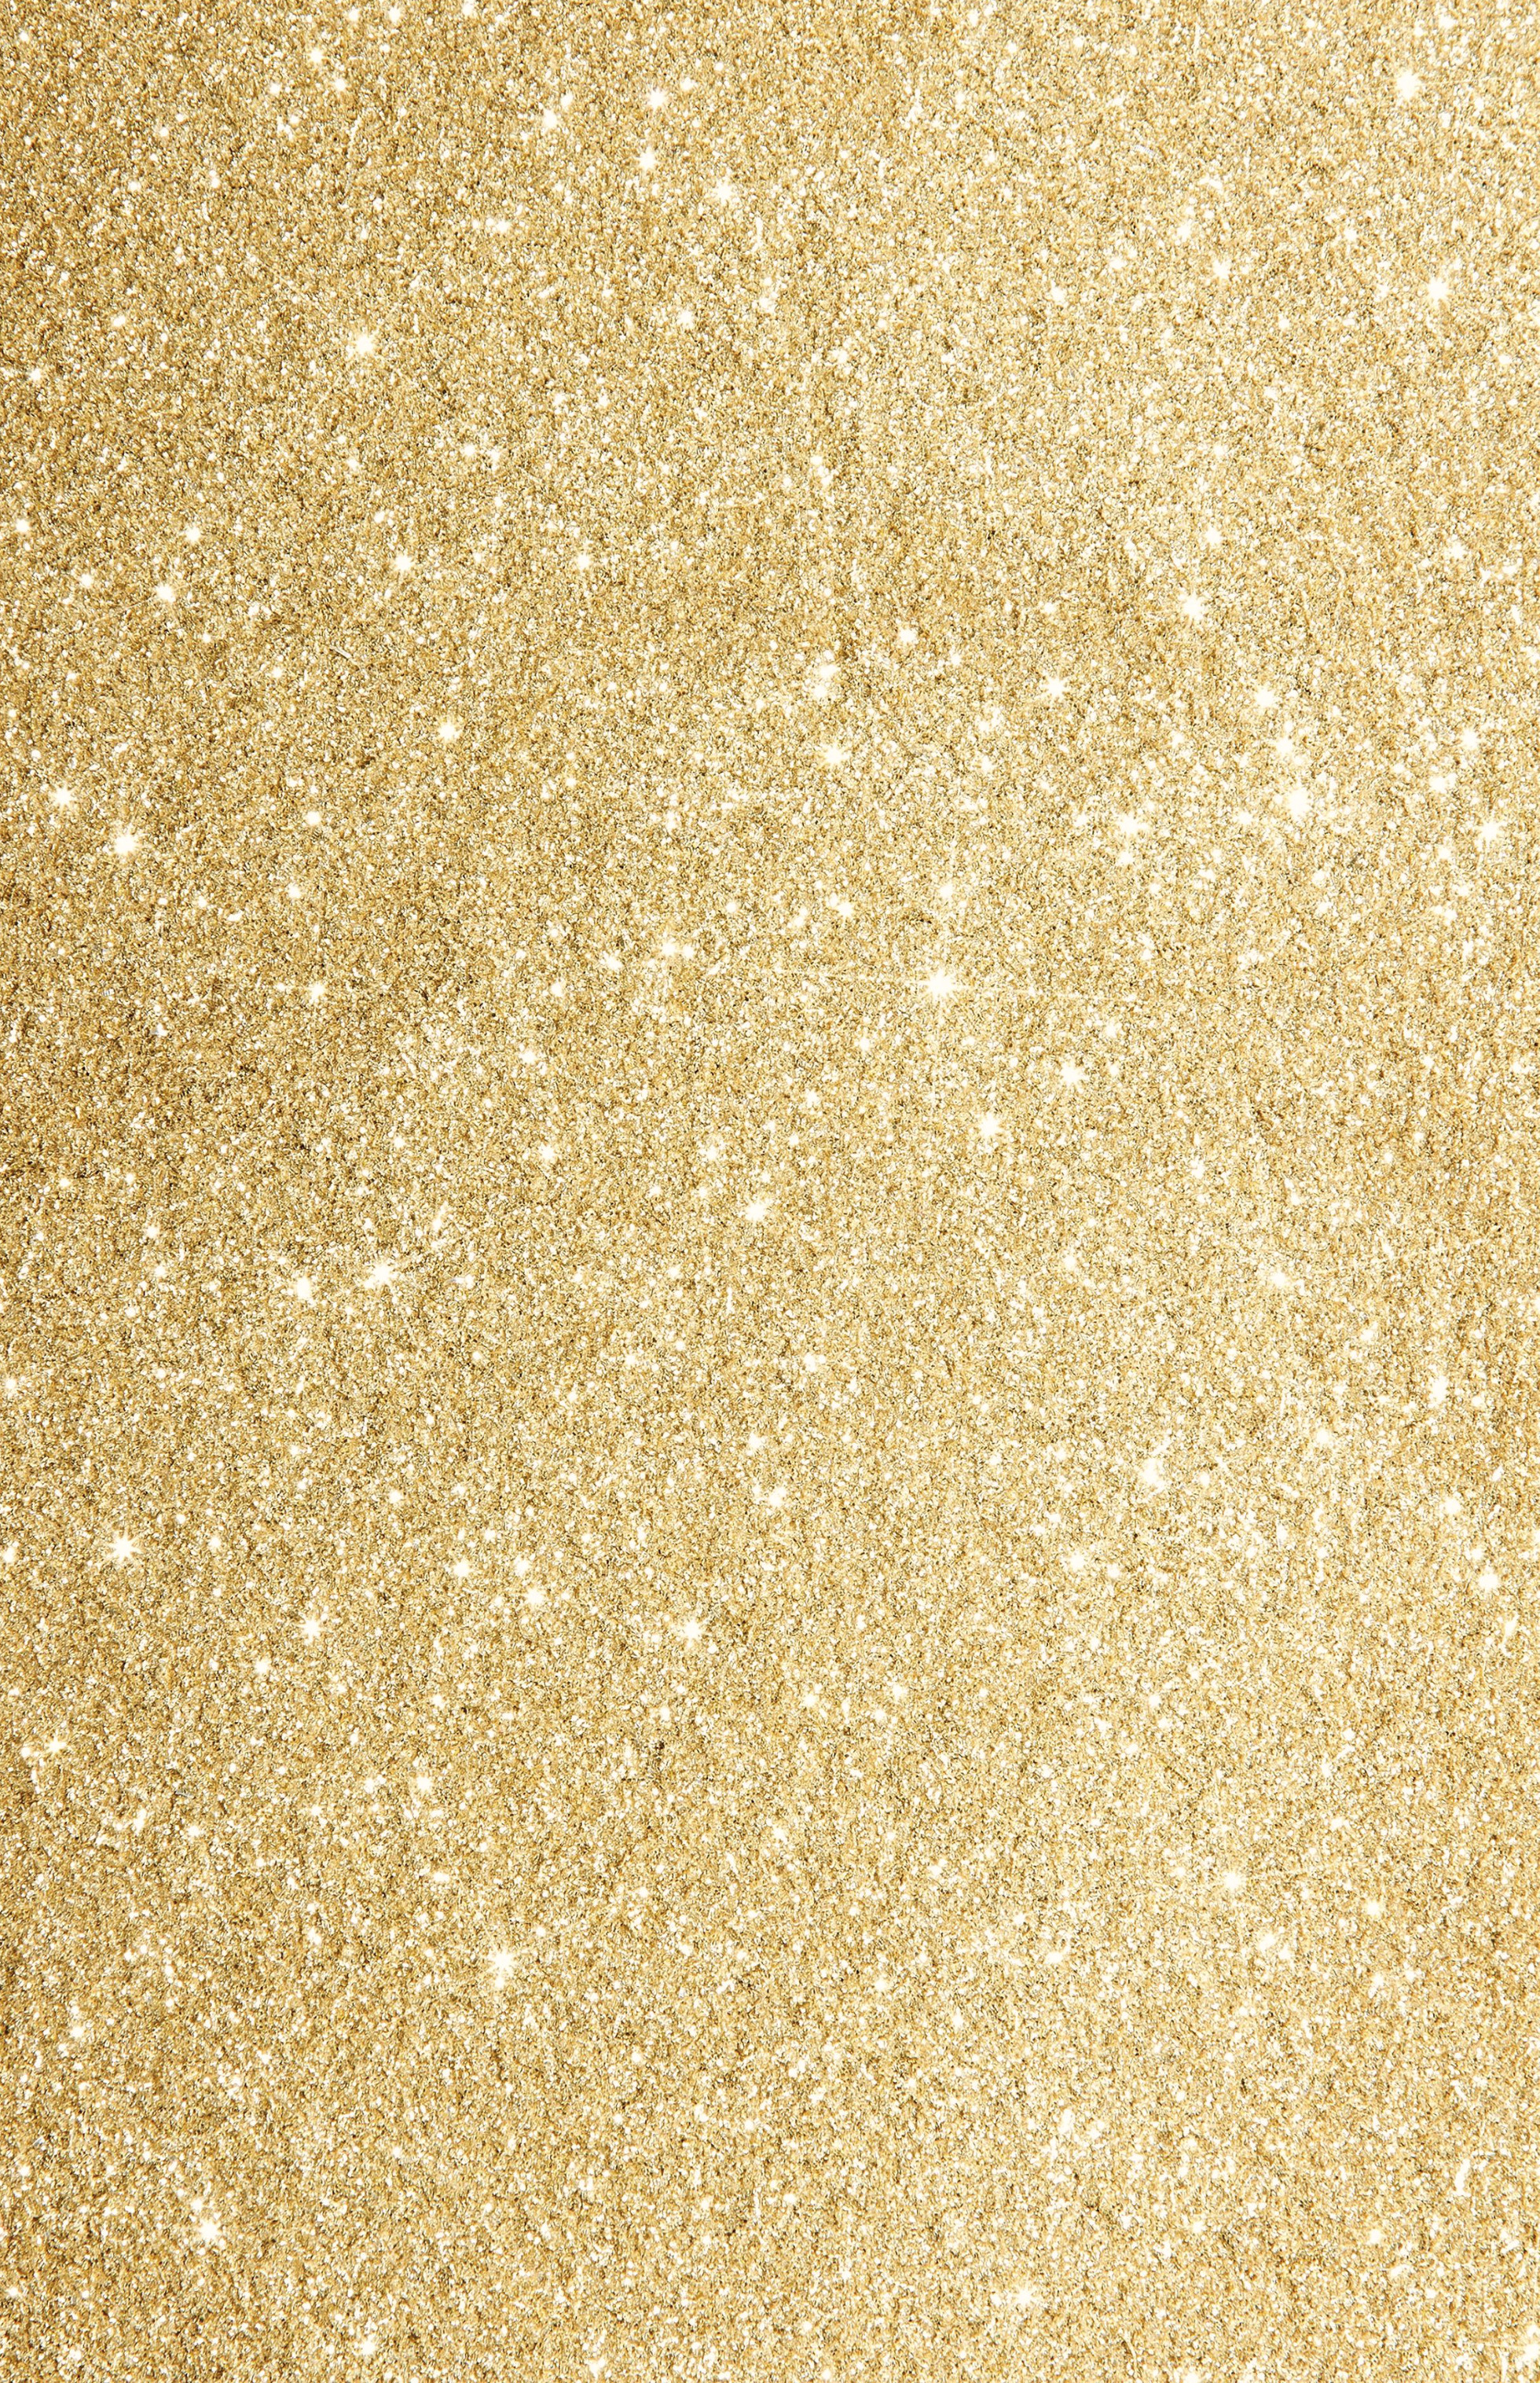 Gold Glitter background Ms